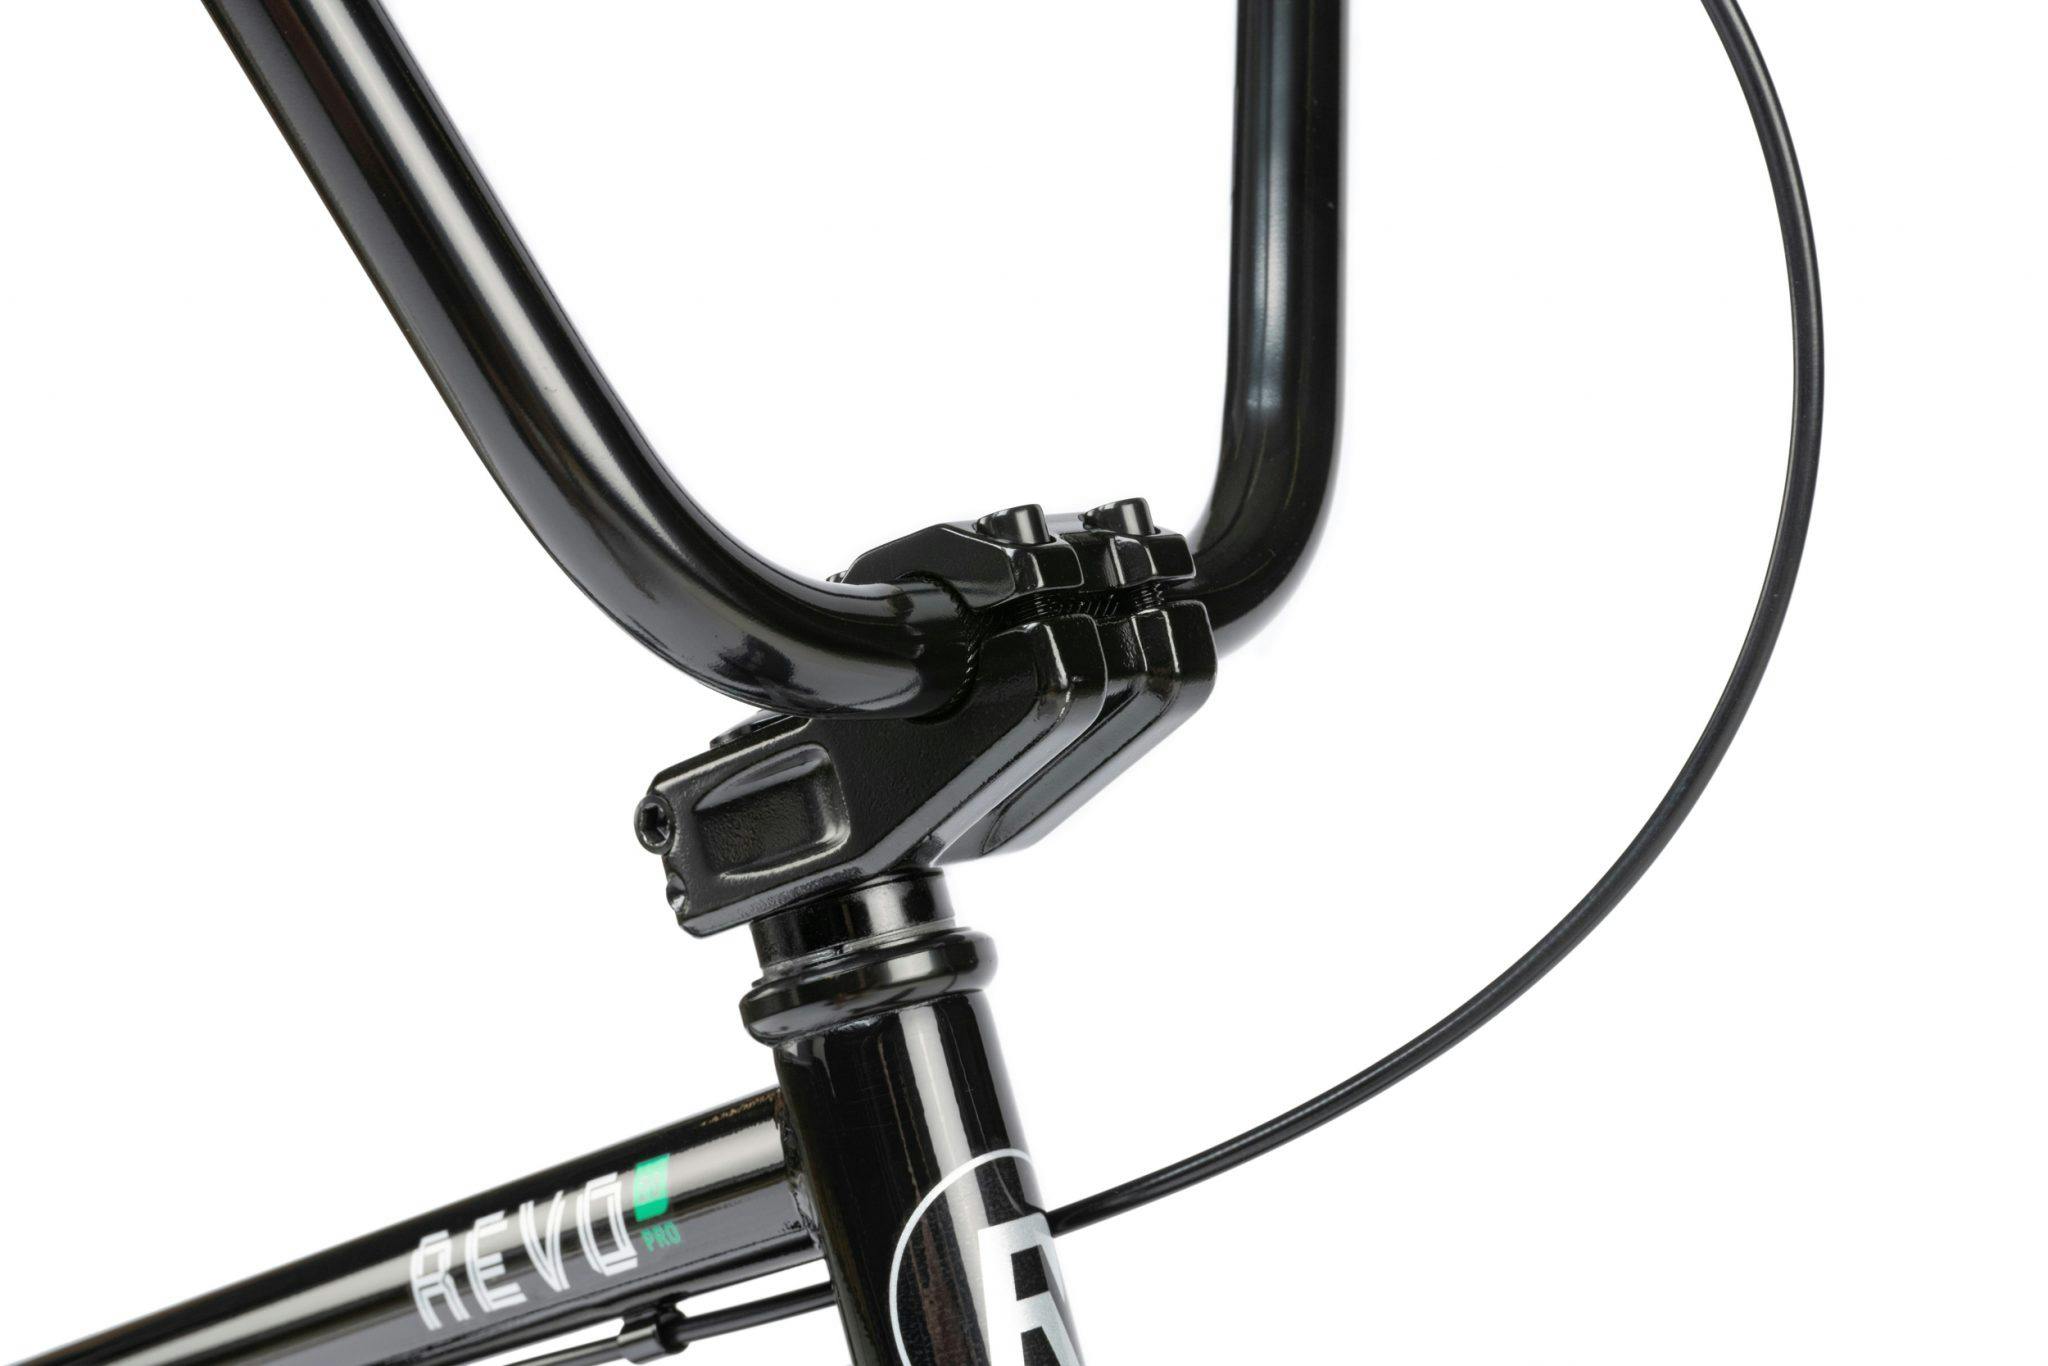 Radio Revo 20" Pro BMX Bike · Black · One size